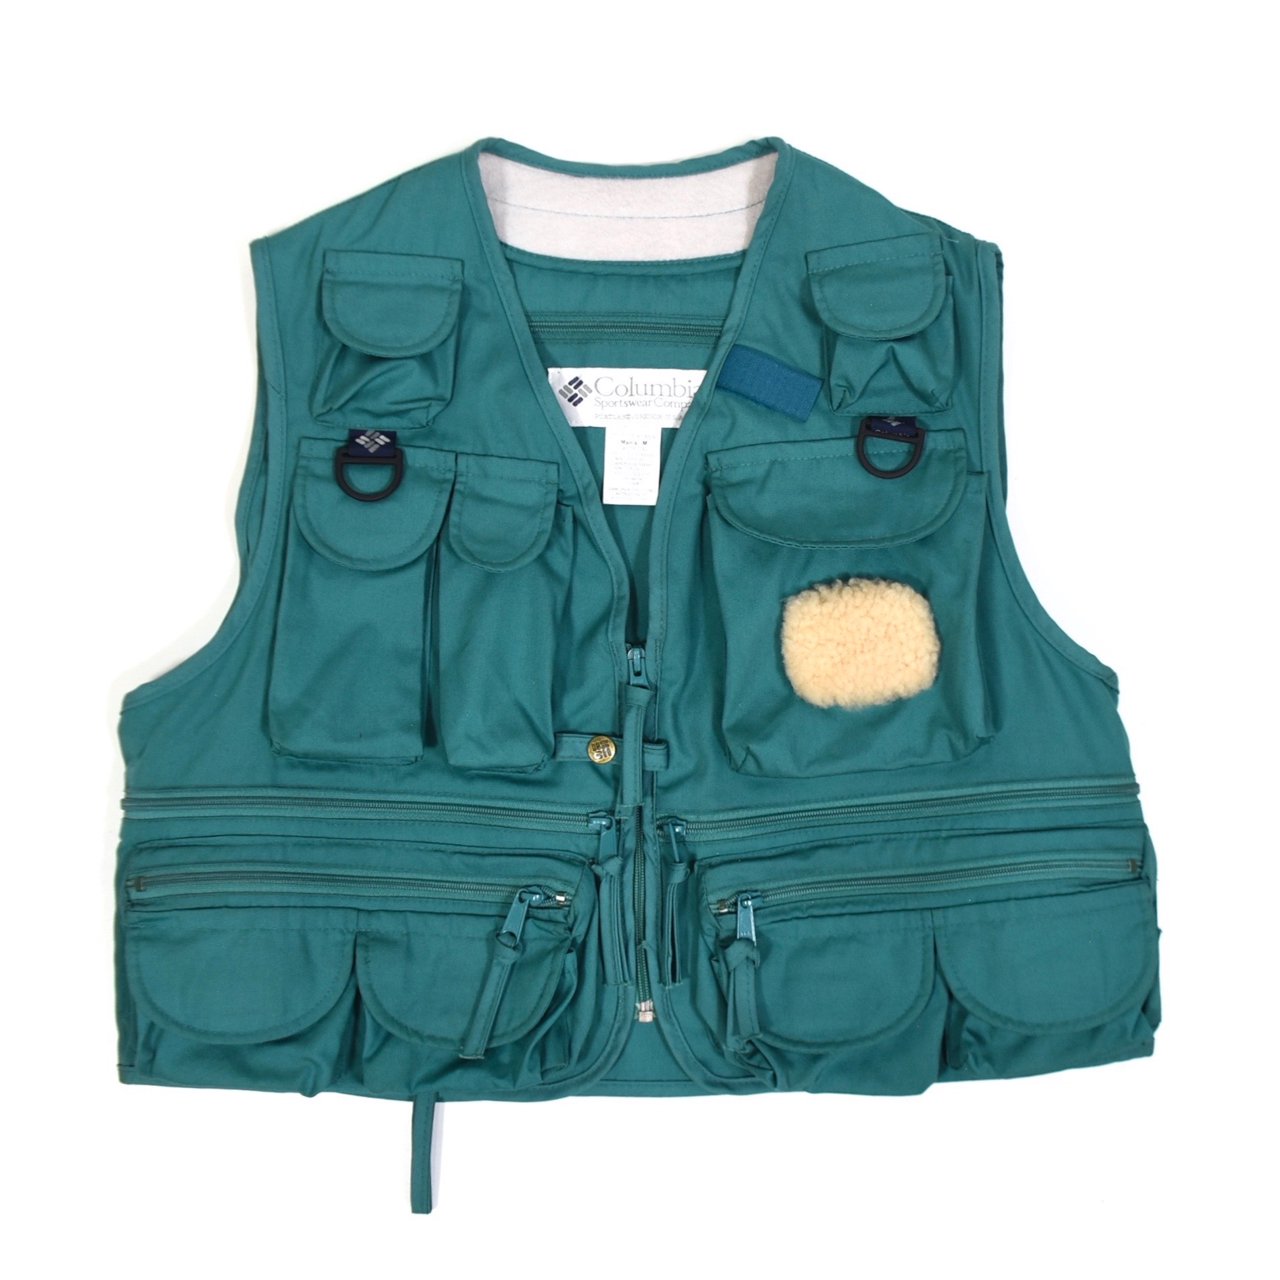 USED】 90's Columbia fishing vest 深いグリーンでファッションアイテムとしても 取り入れやすいColumbiaの�